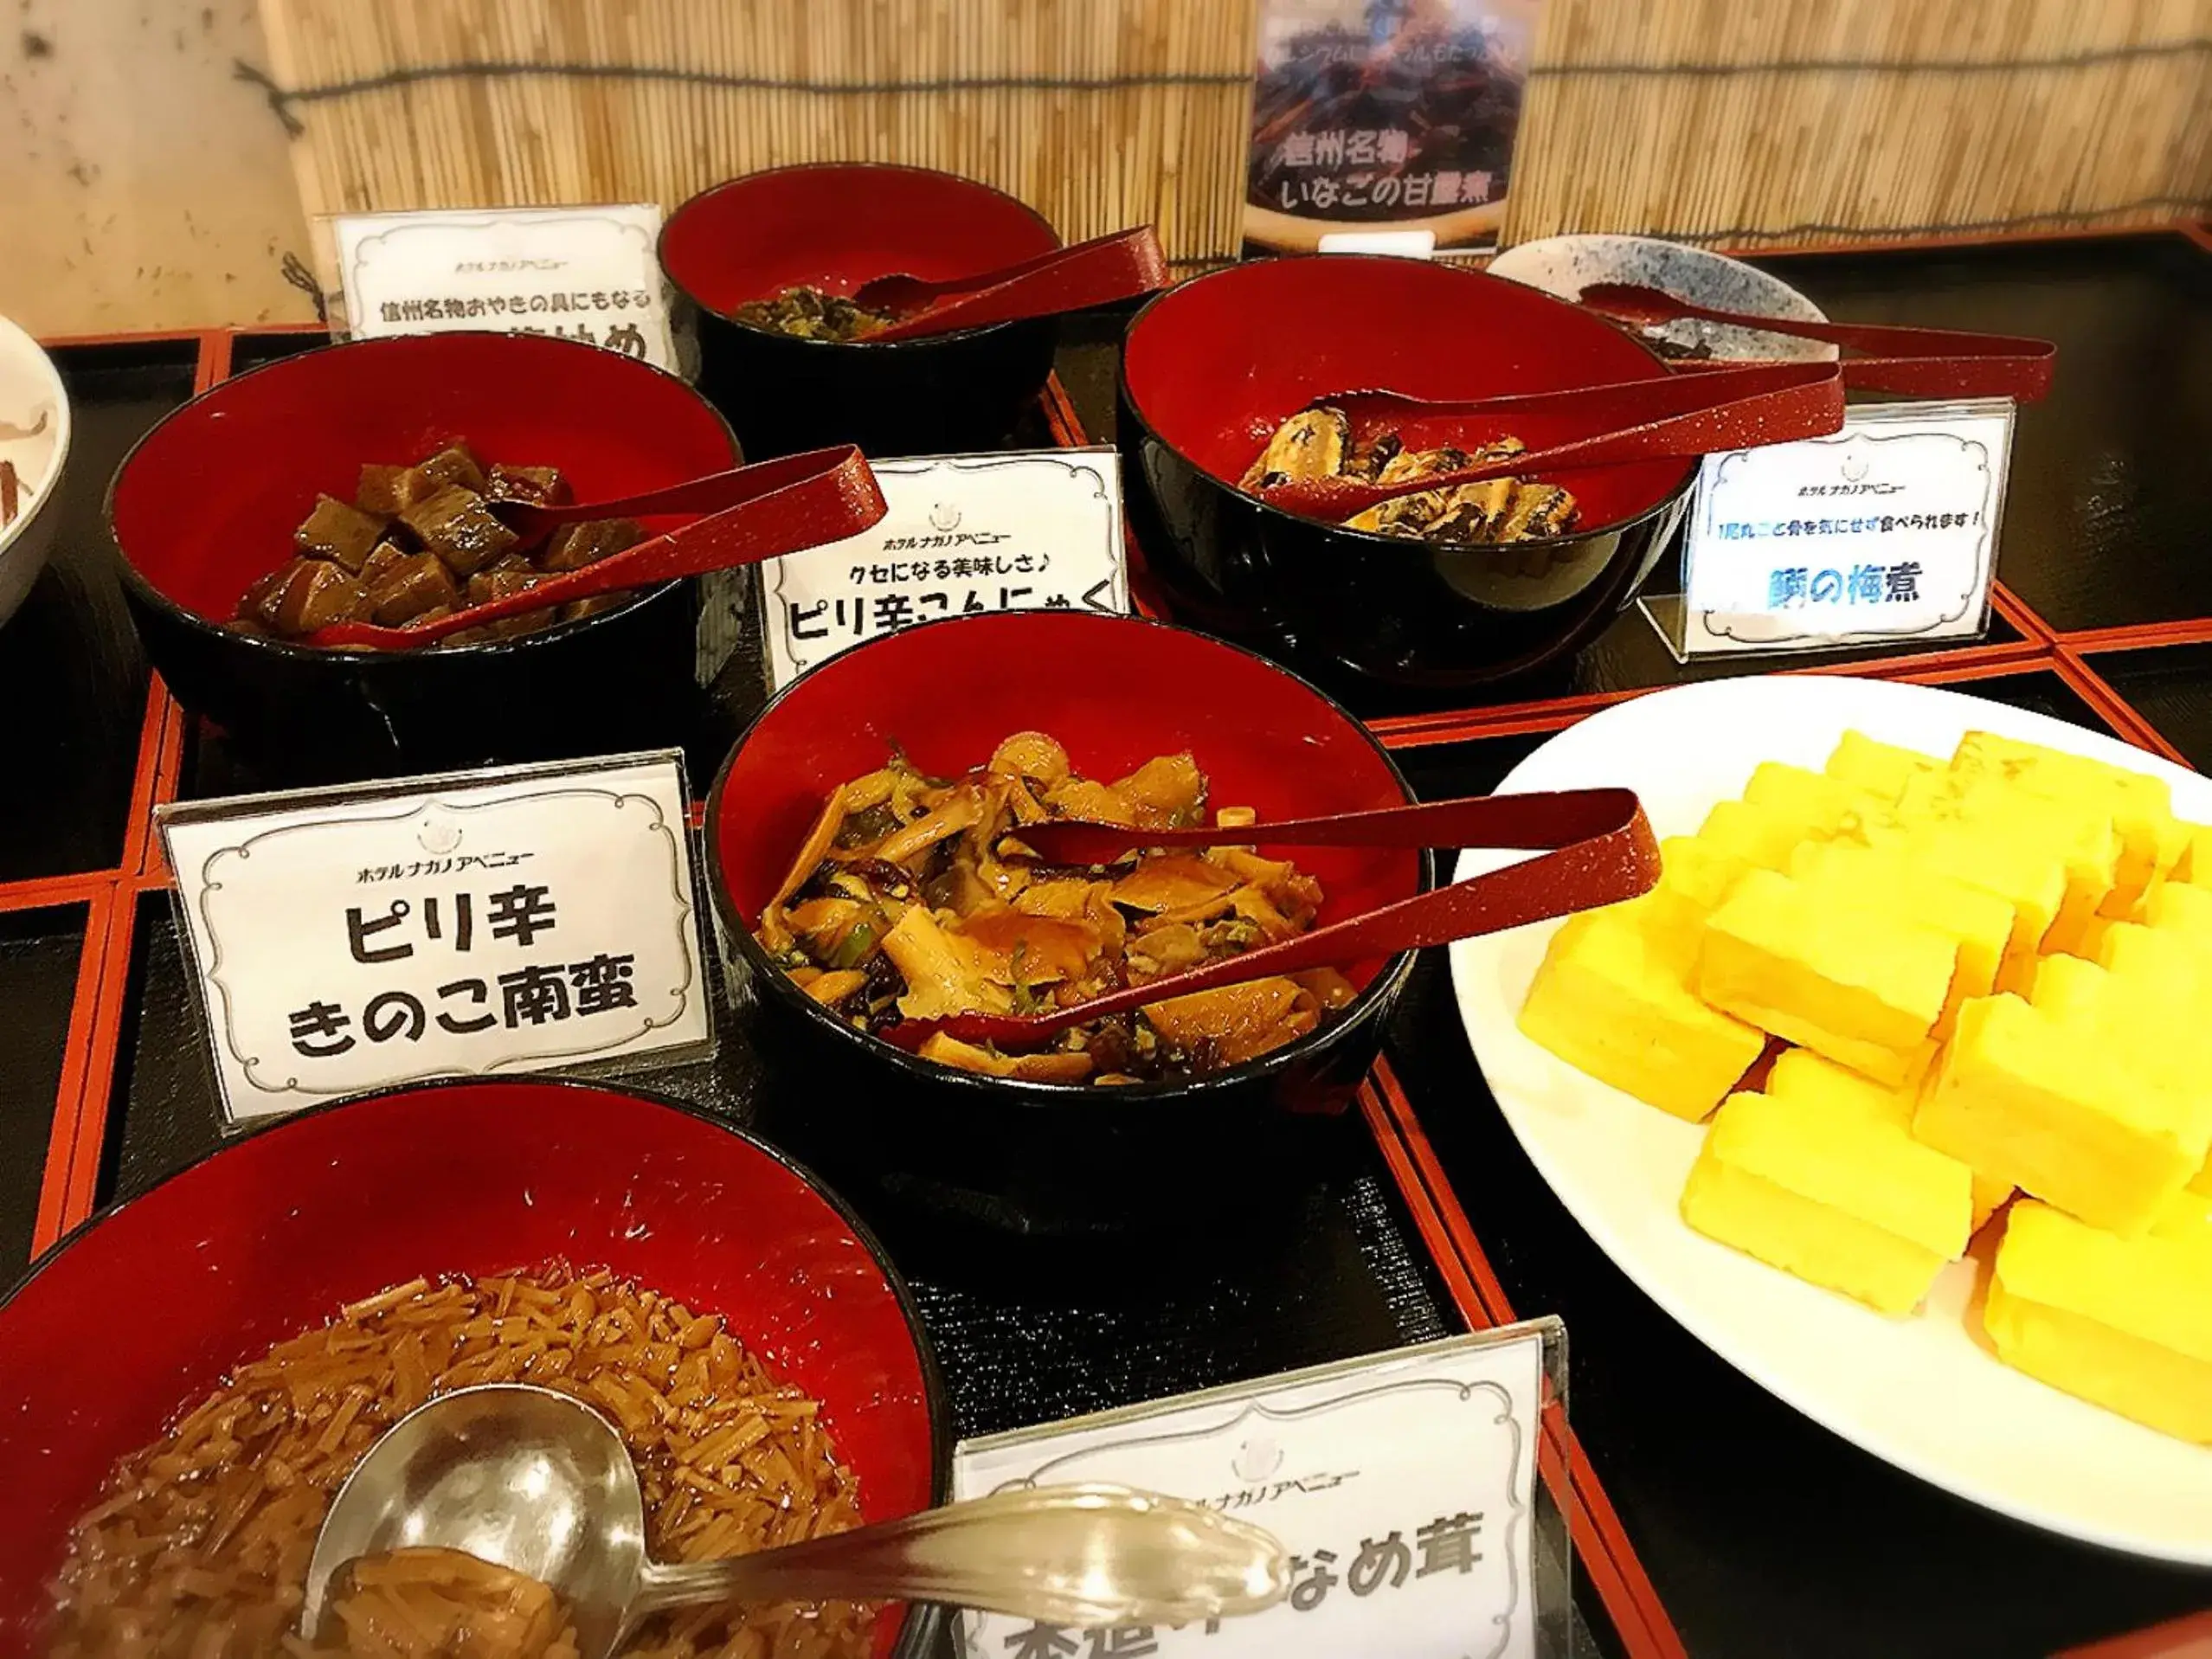 Food close-up in Hotel Nagano Avenue